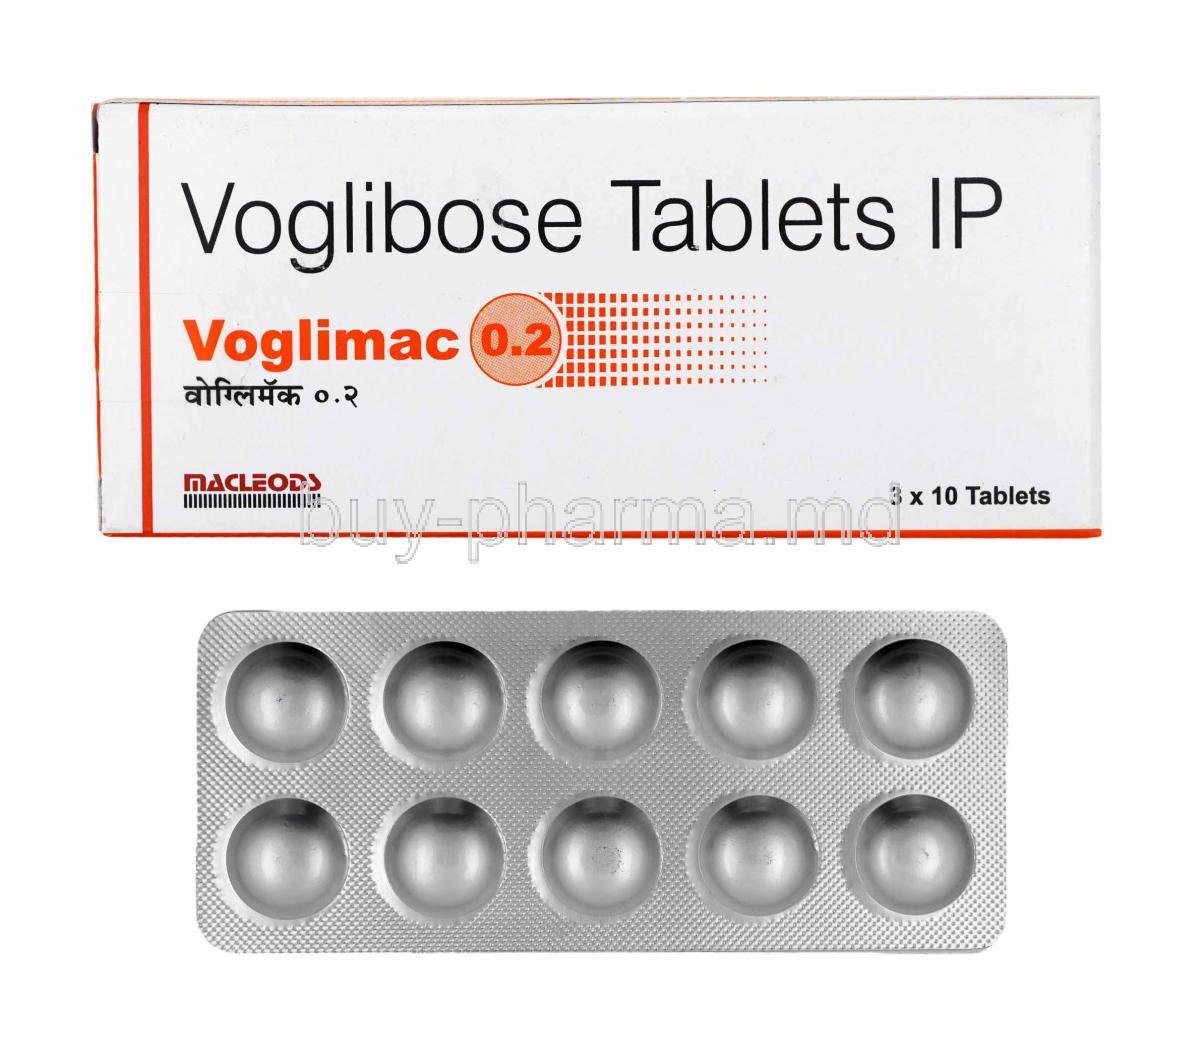 Voglimac, Voglibose 0.2mg box and tabletsjpg